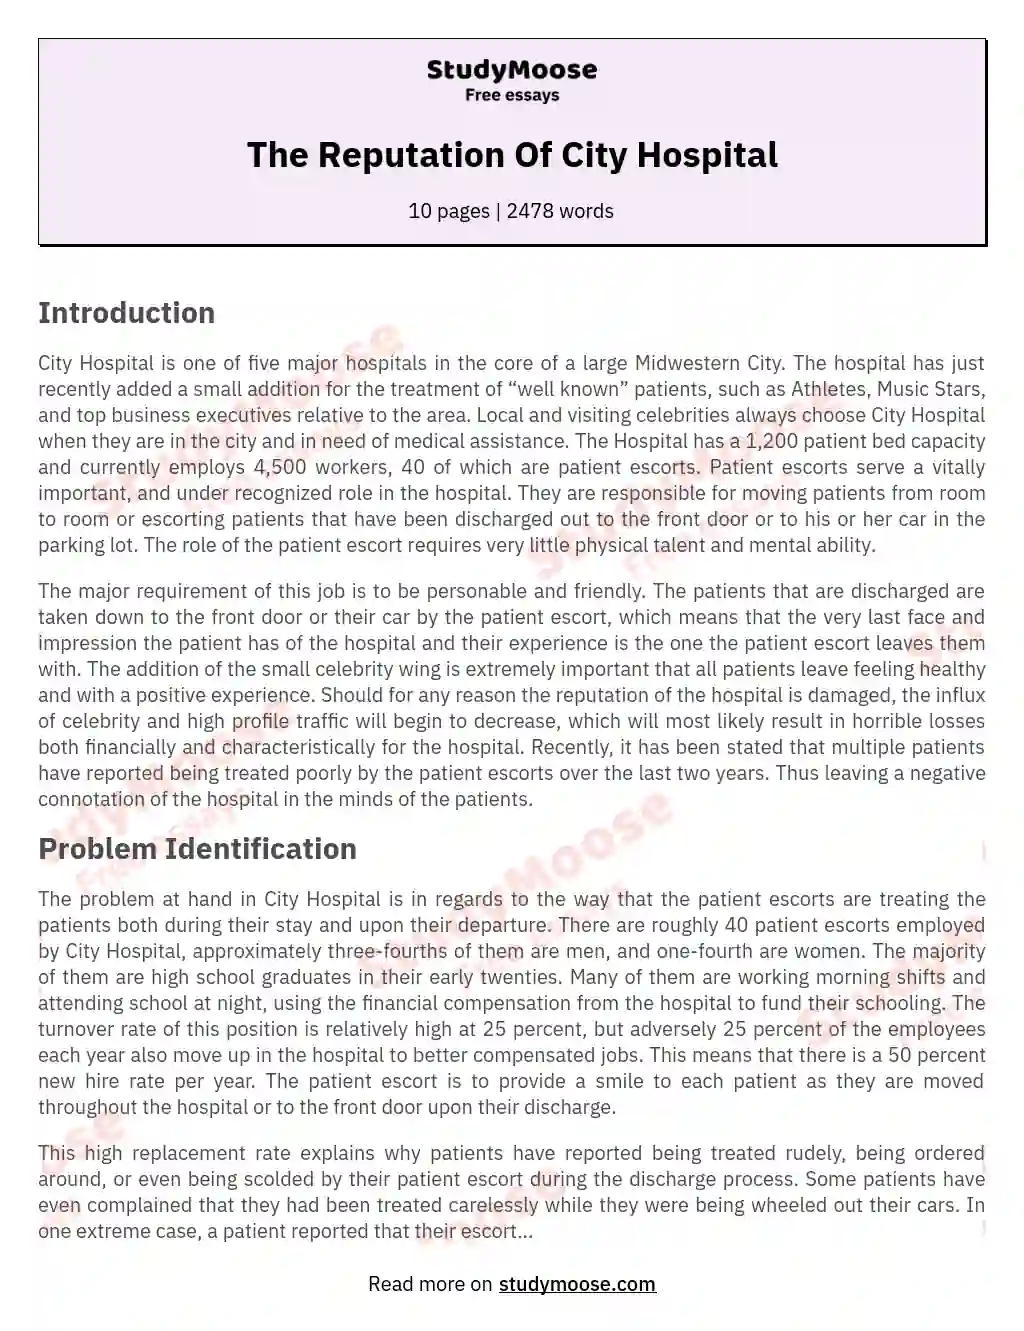 The Reputation Of City Hospital essay